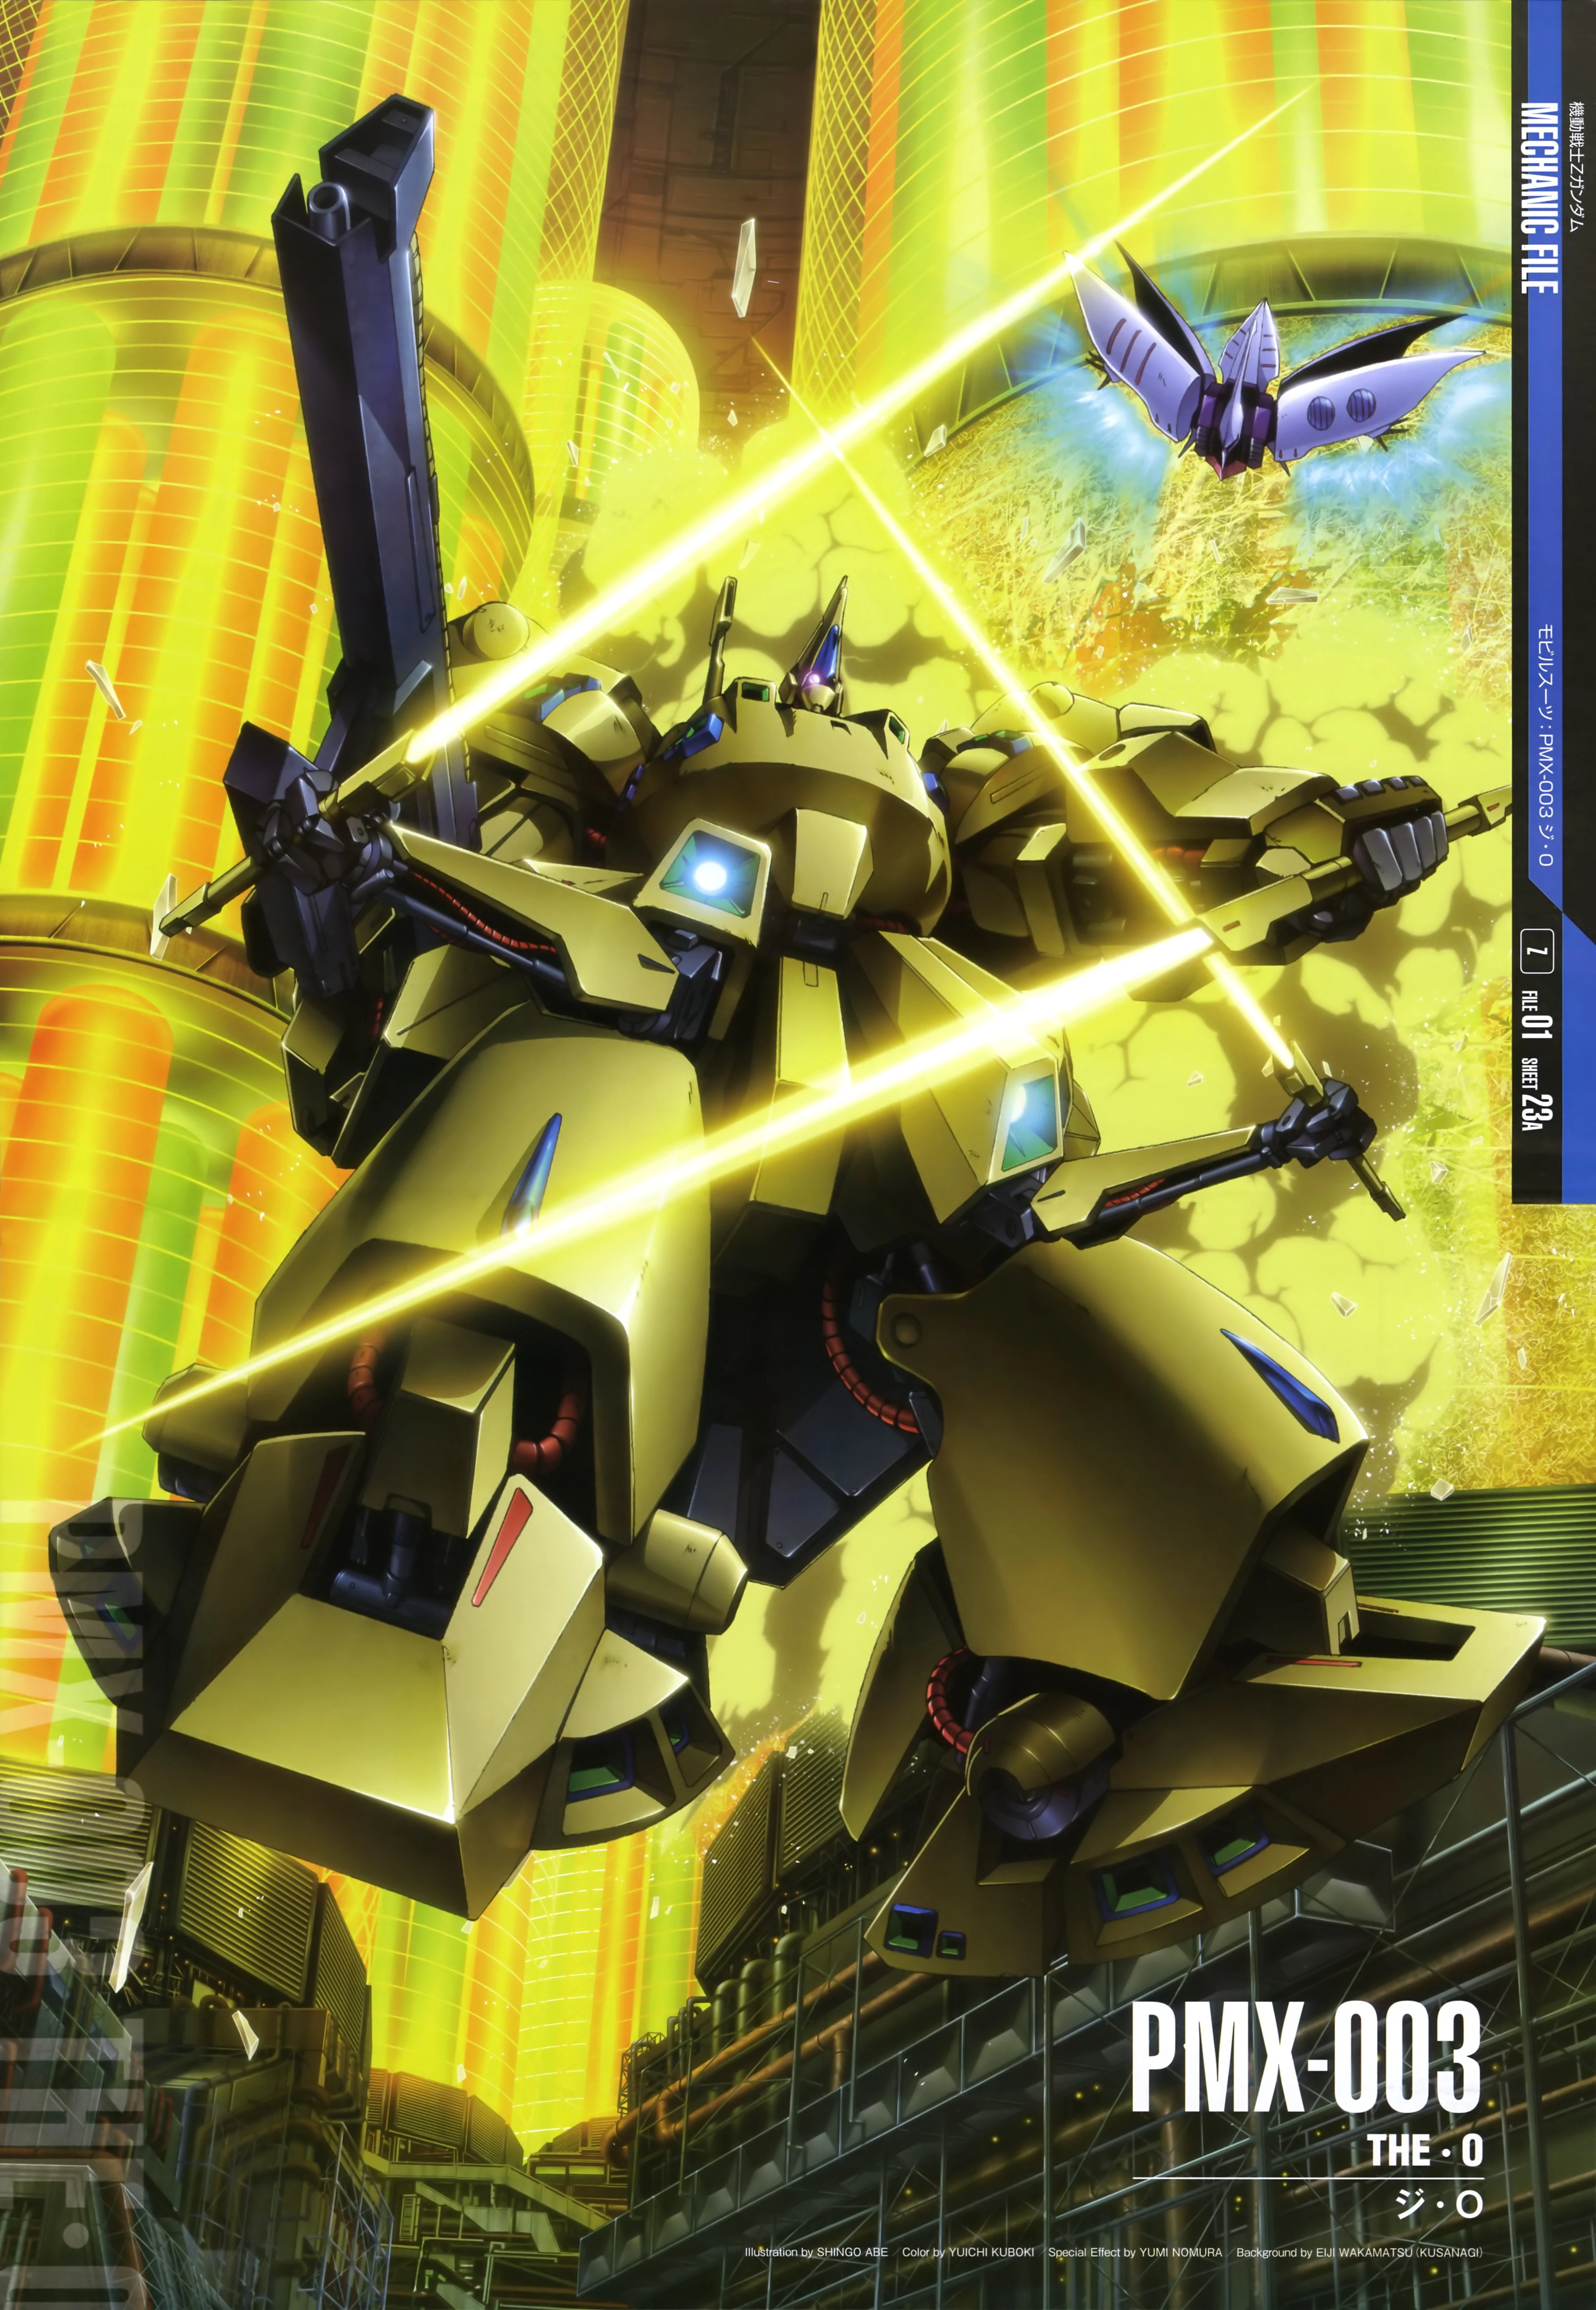 The O Mobile Suit Zeta Gundam Mobile Suit Anime Mechs Super Robot Taisen Artwork Digital Art Qubeley 3934x5693